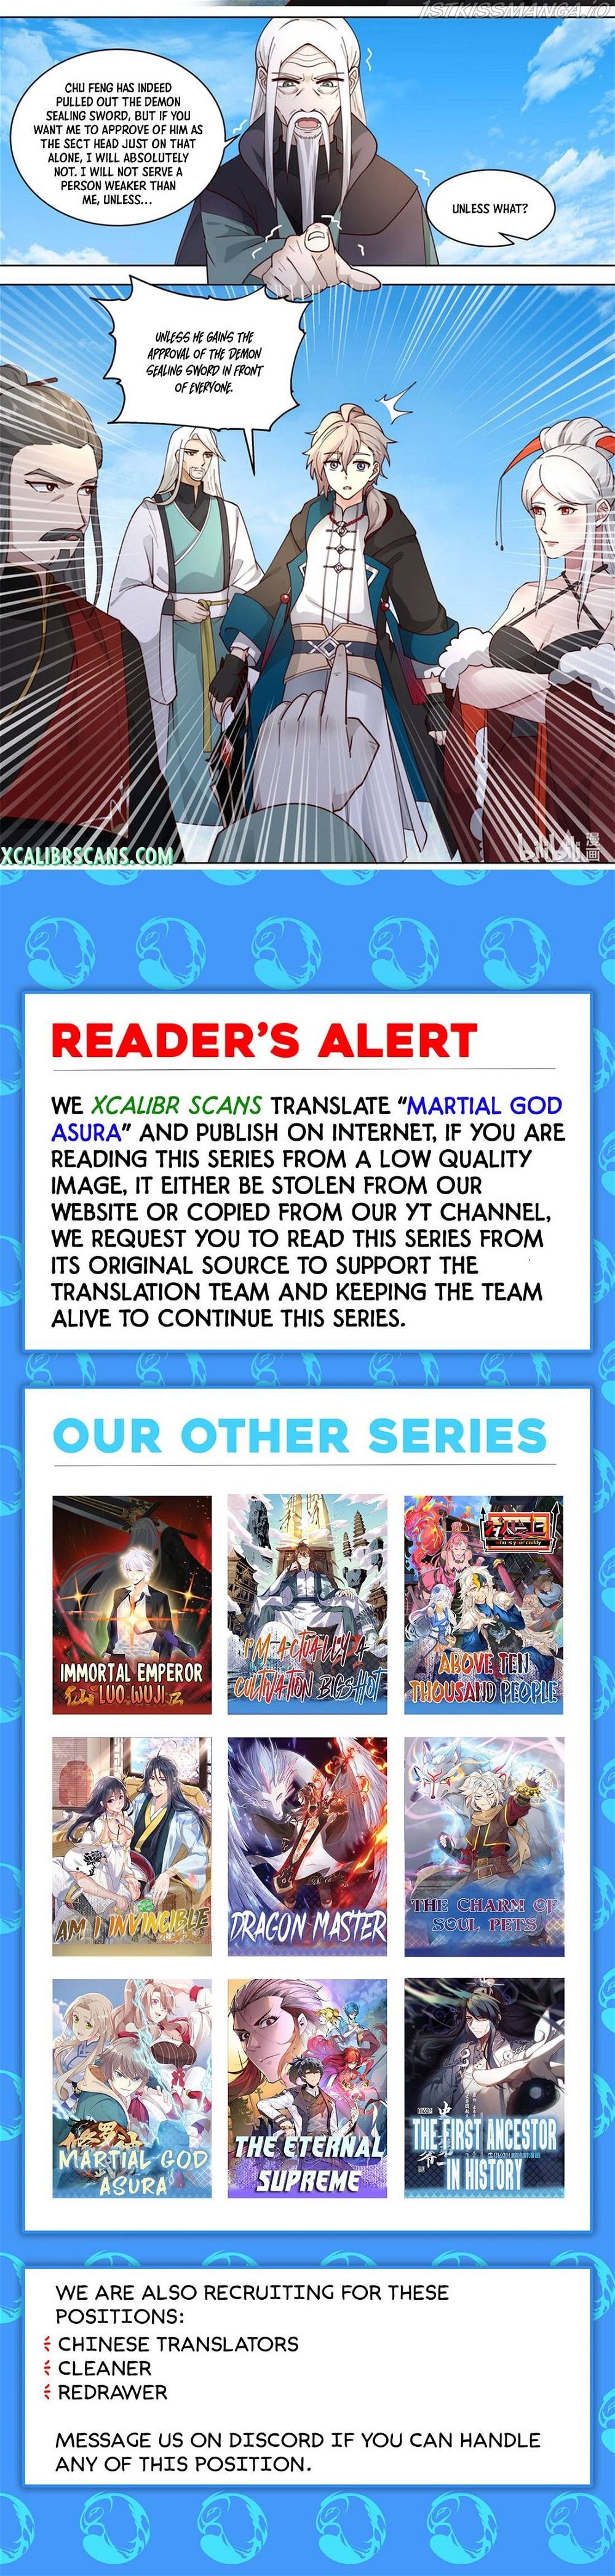 Martial God Asura Chapter 605 - Page 10